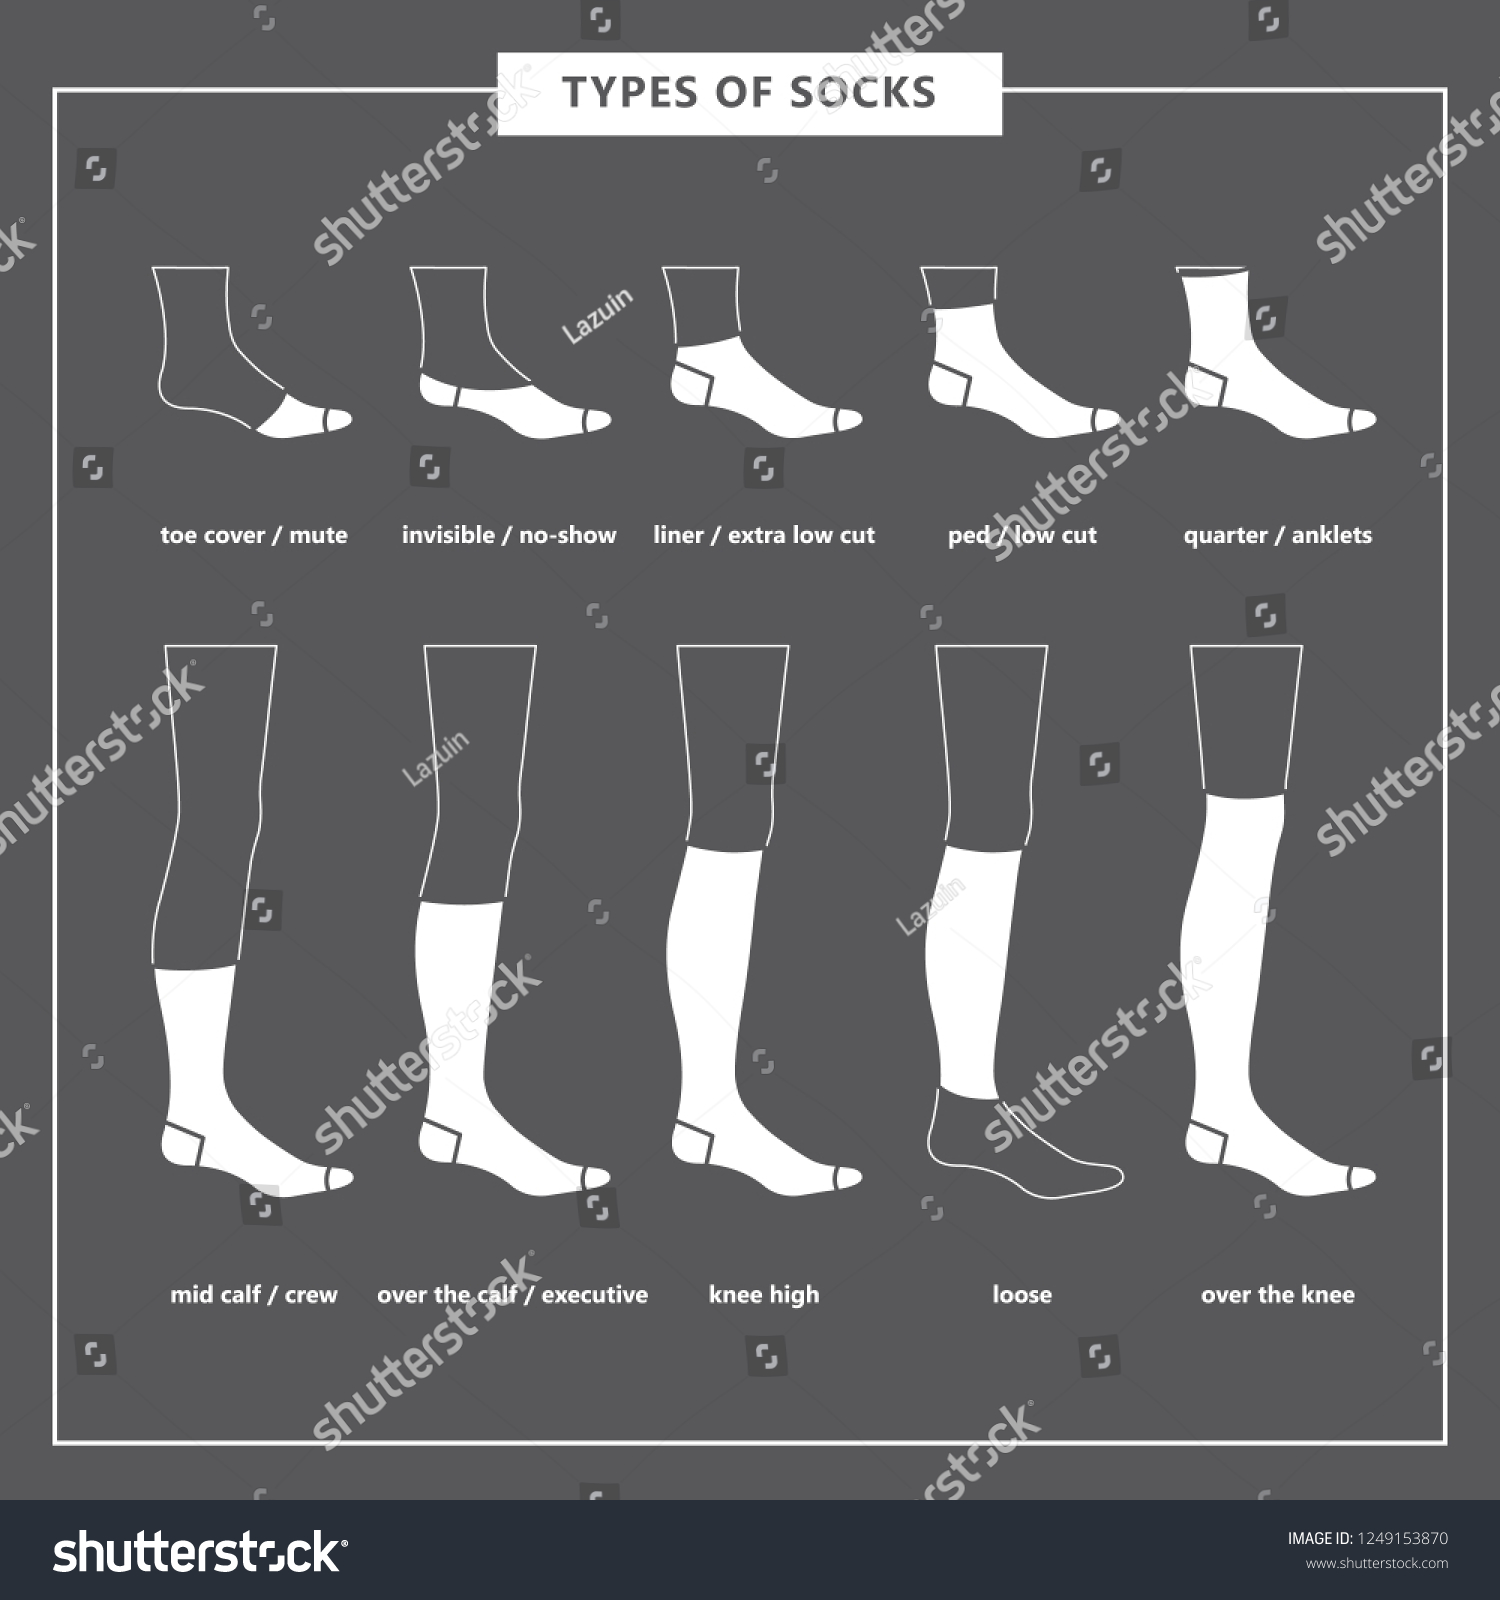 extra low cut liner socks